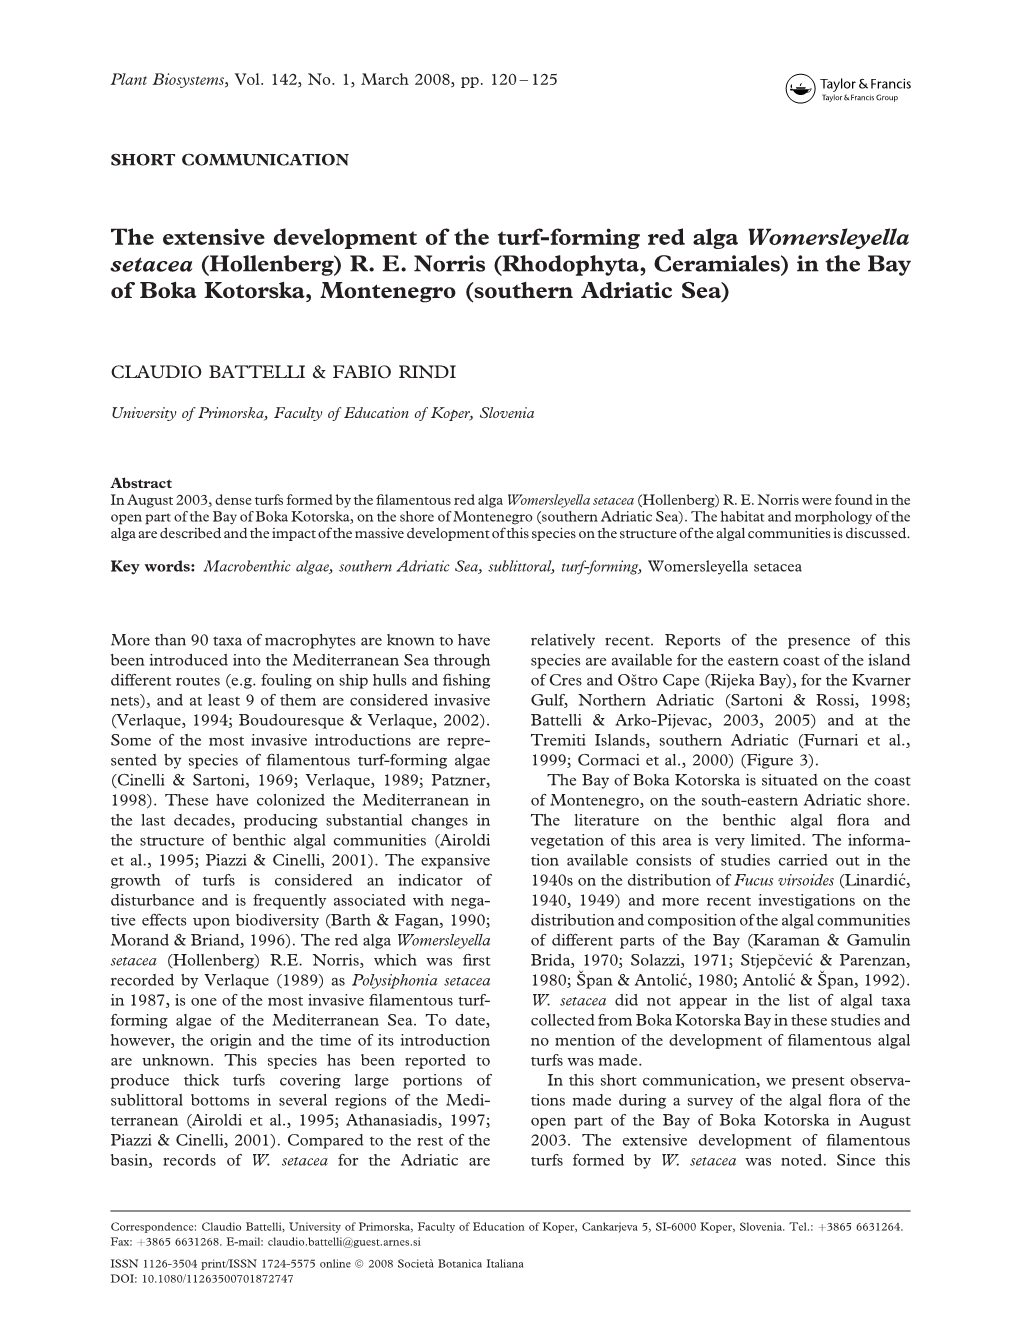 The Extensive Development of the Turf-Forming Red Alga Womersleyella Setacea (Hollenberg) R. E. Norris (Rhodophyta, Ceramiales)